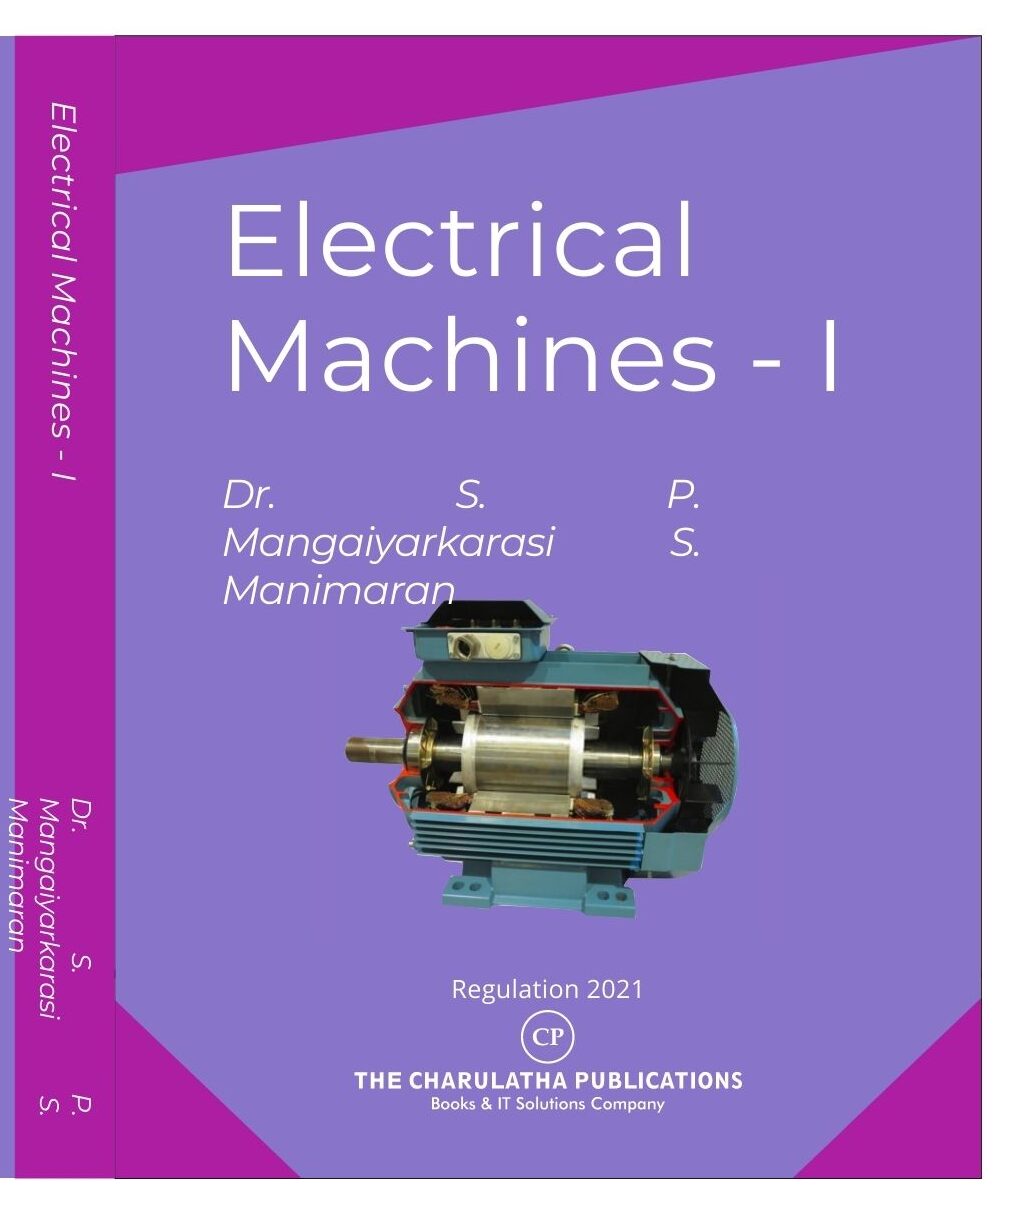 The charulatha publications Electrical Machines I